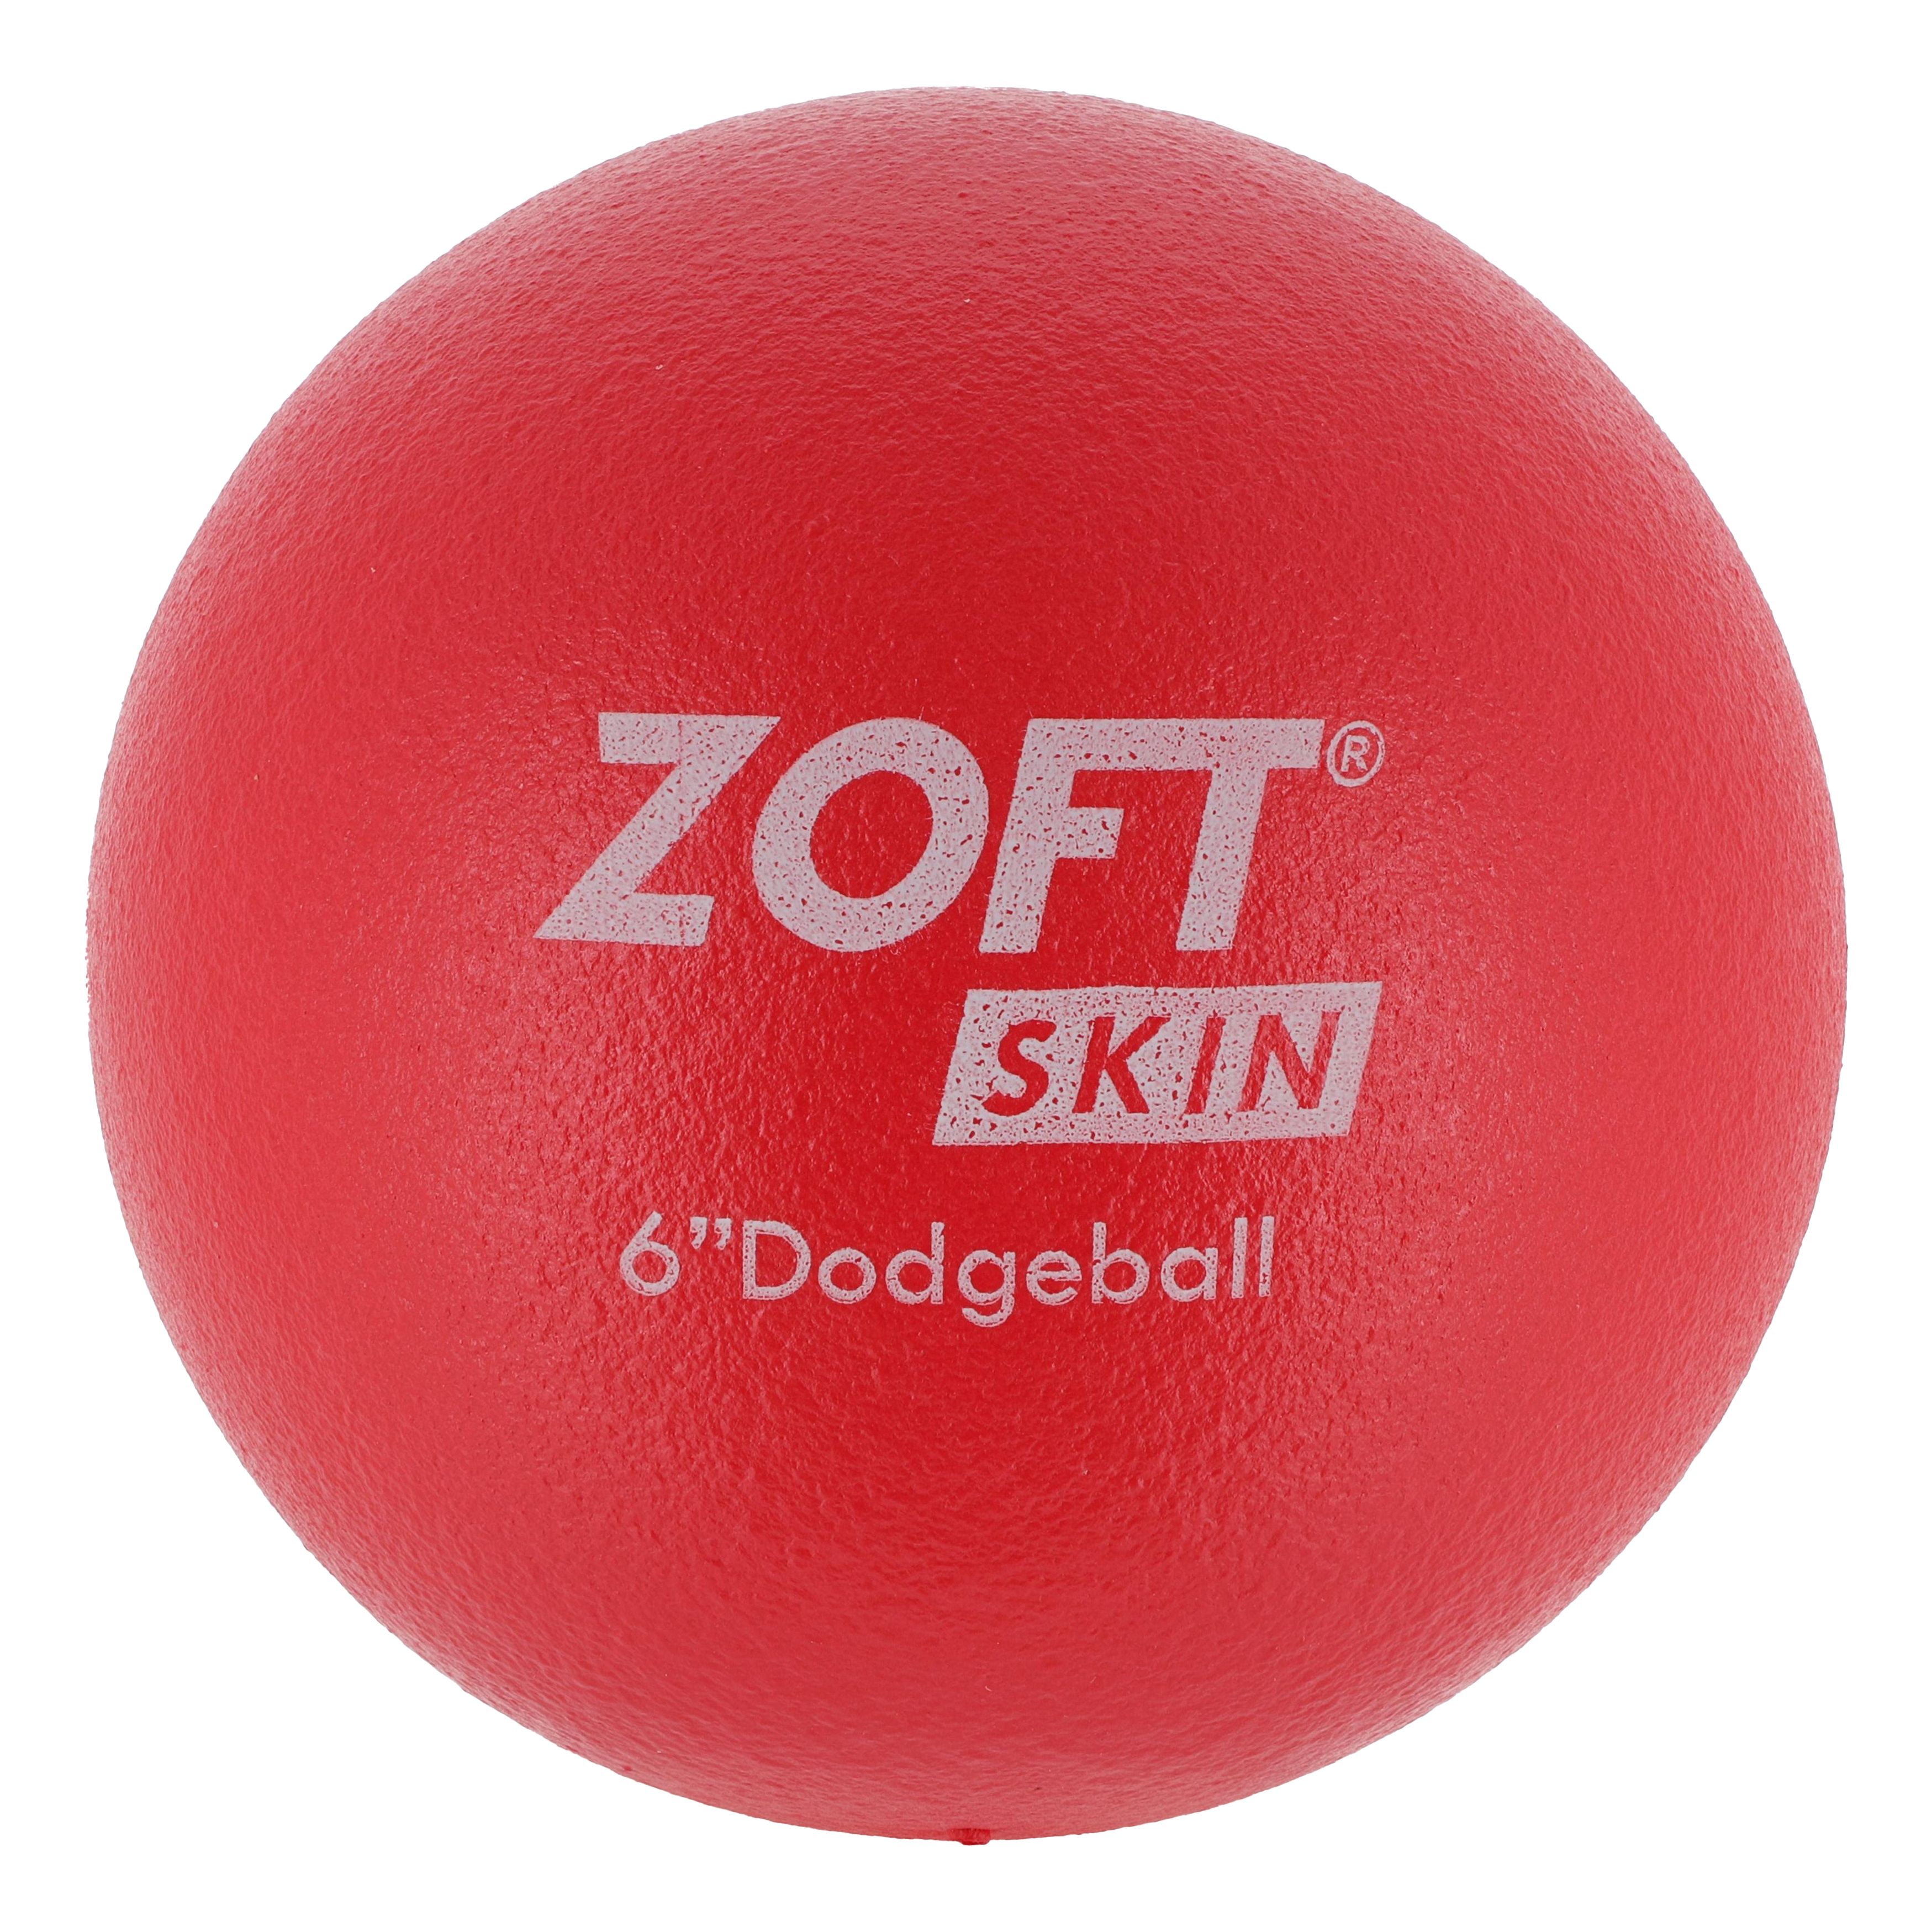 Zoftskin Dodgeball Size 6 Red